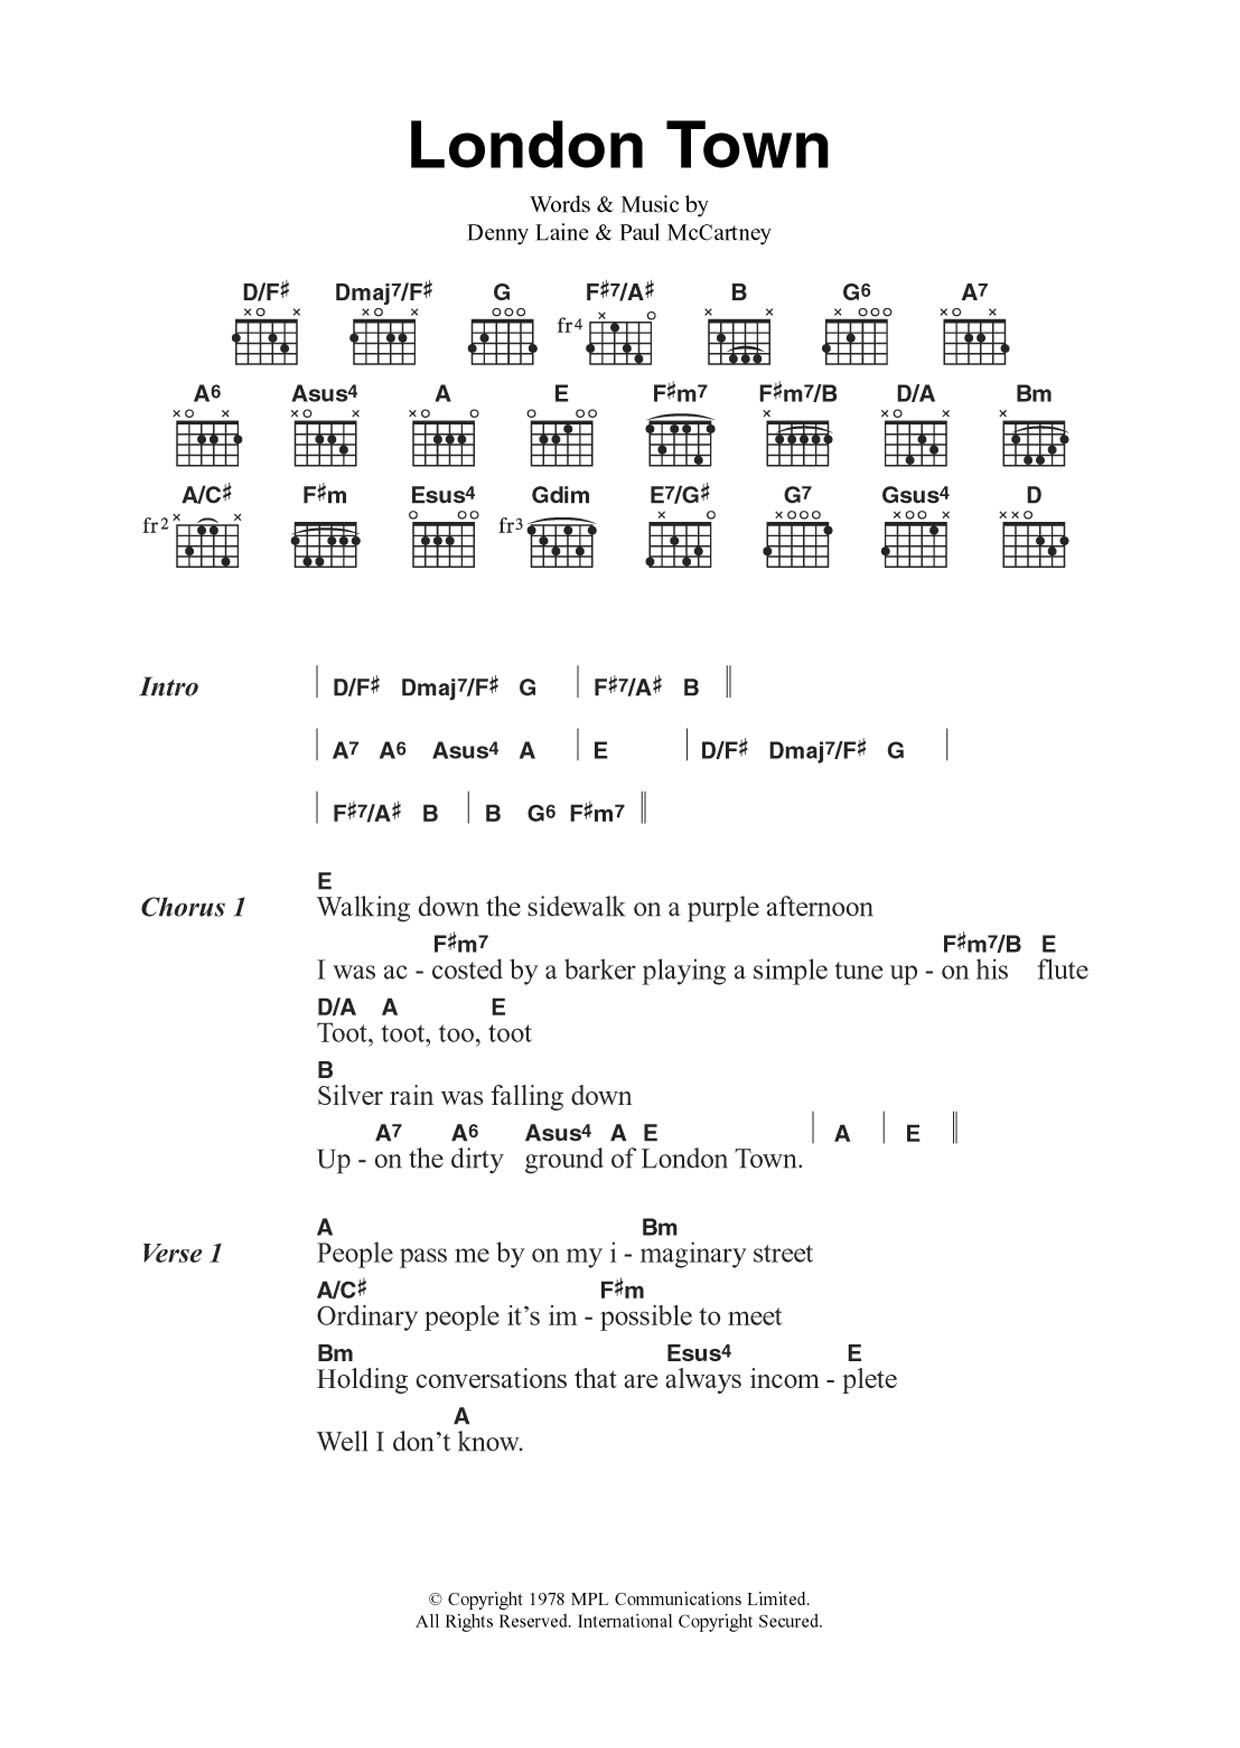 Wings London Town Sheet Music Notes & Chords for Guitar Chords/Lyrics - Download or Print PDF